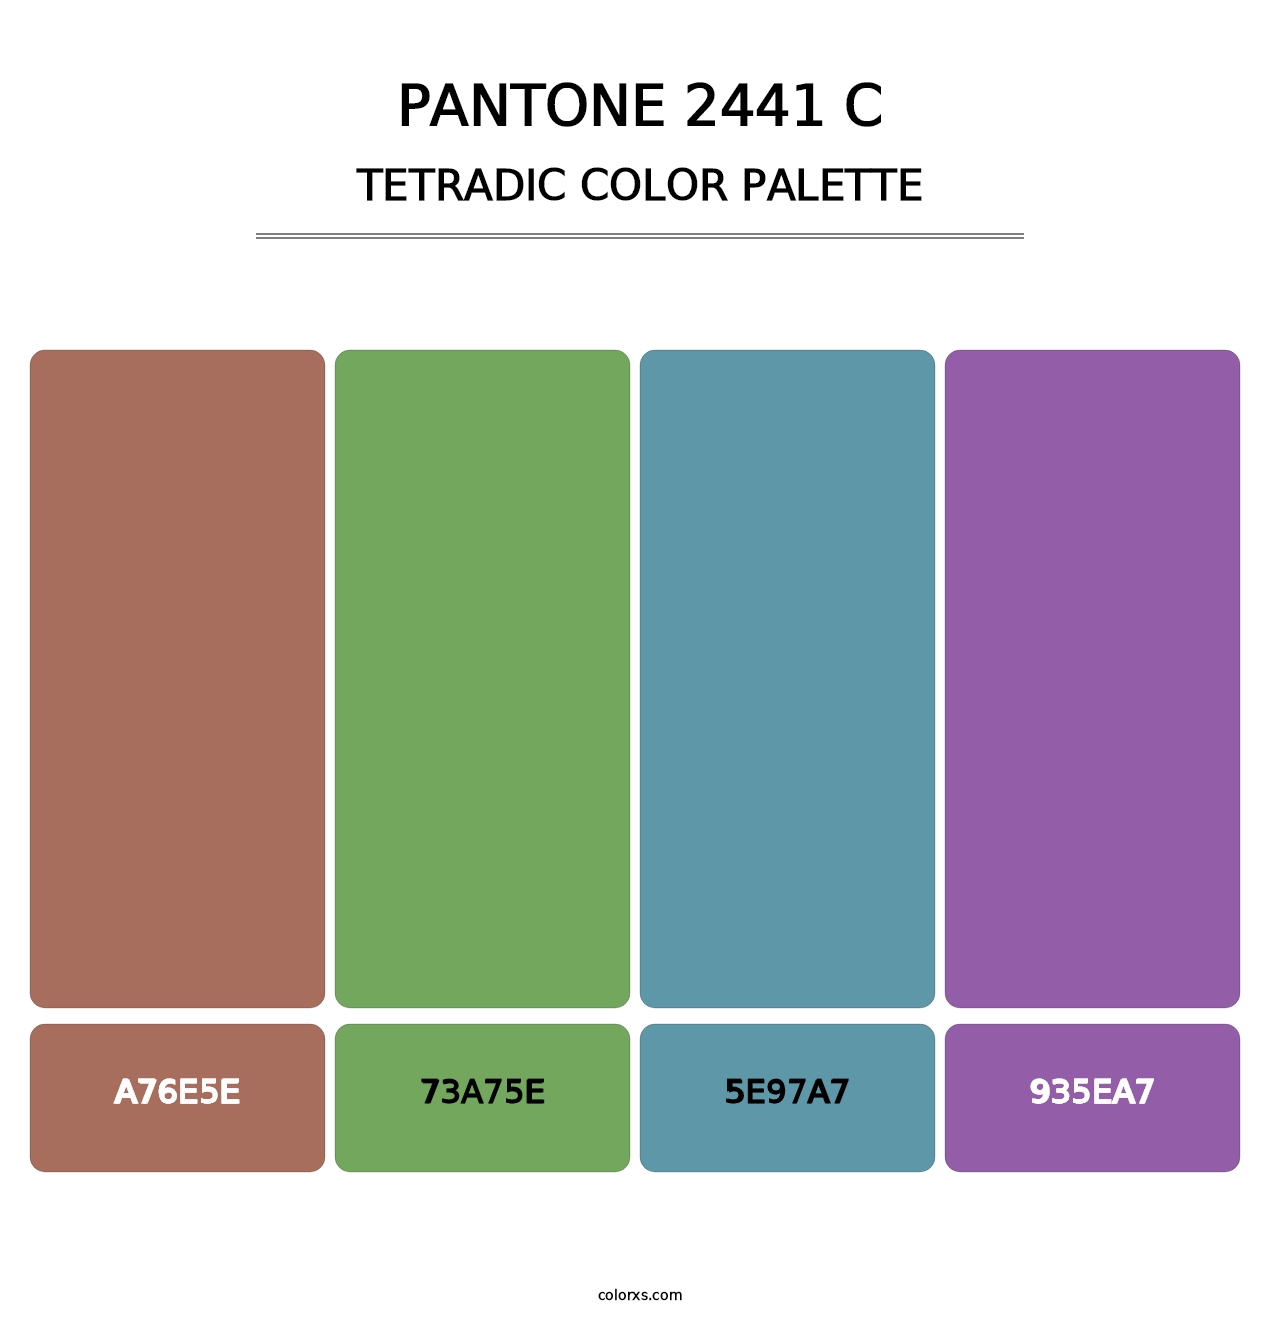 PANTONE 2441 C - Tetradic Color Palette